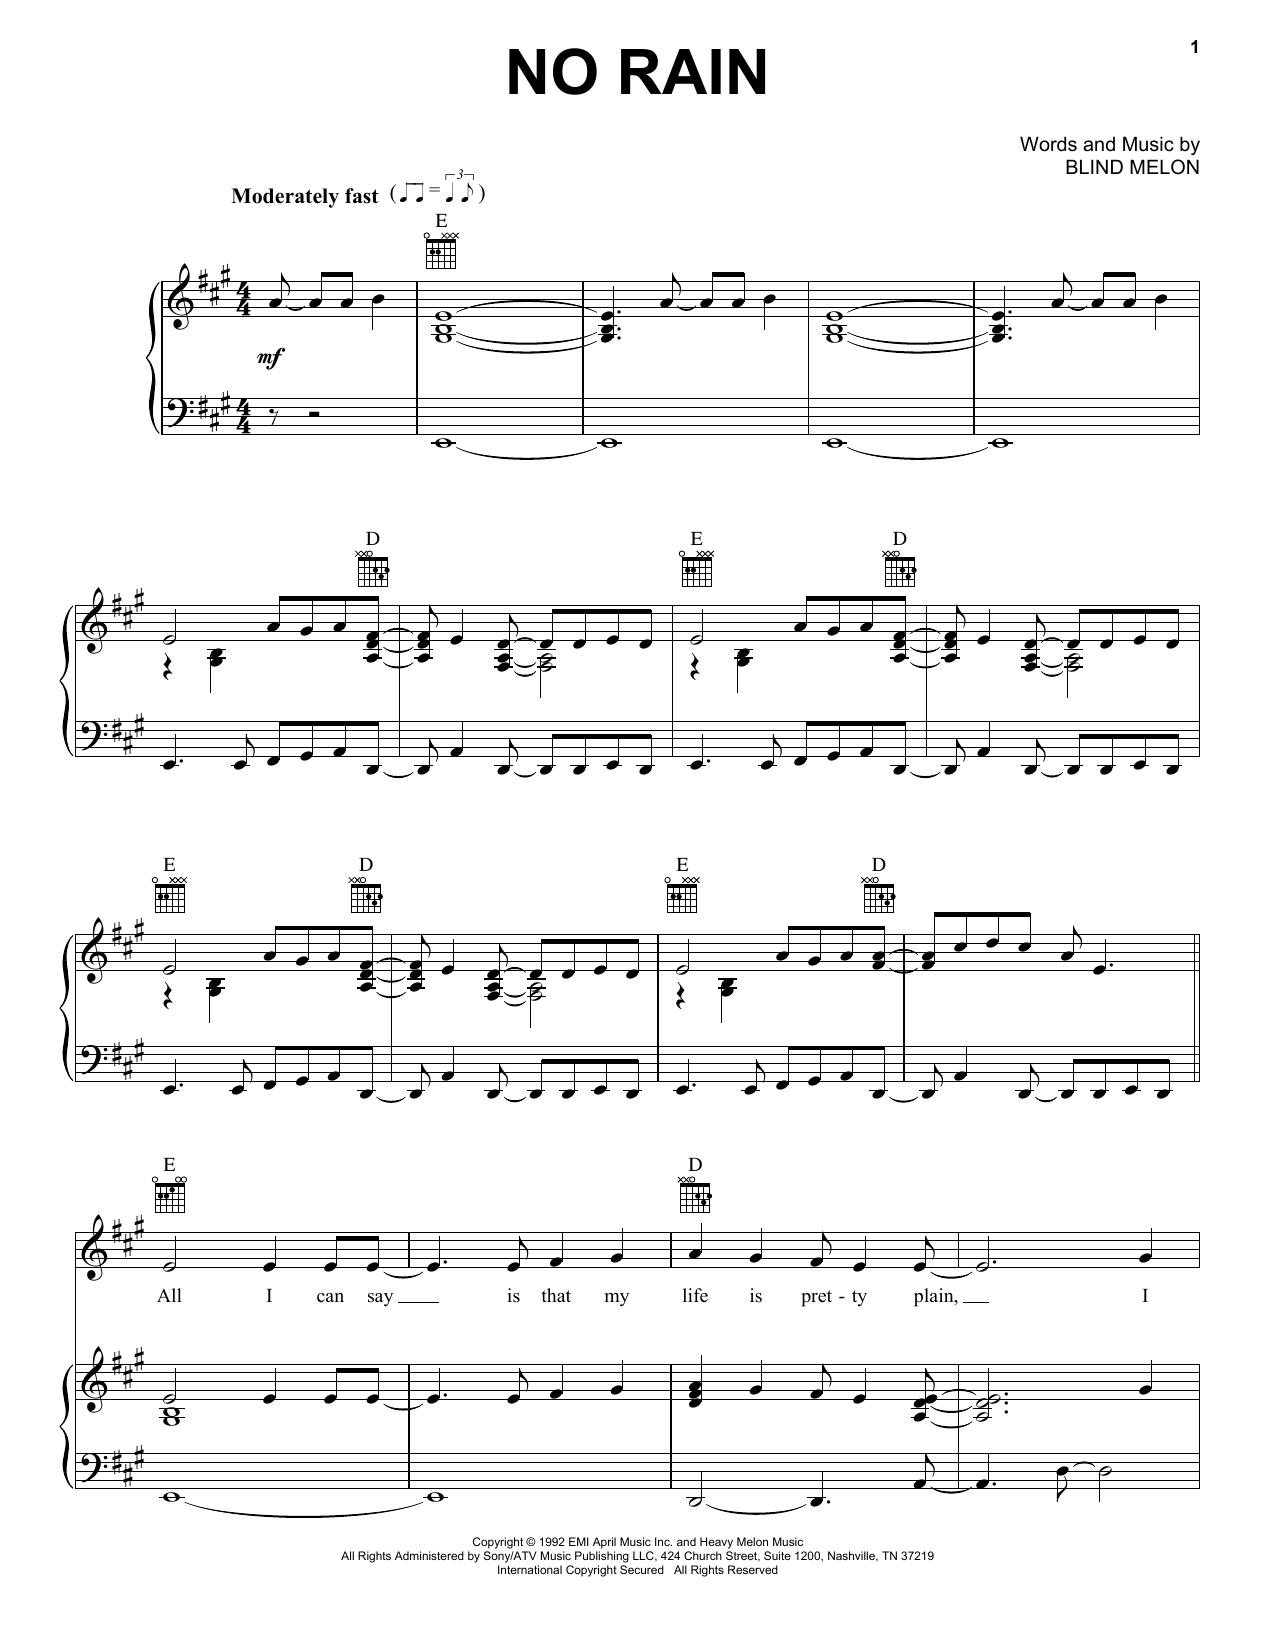 Blind Melon No Rain Sheet Music Notes & Chords for Guitar Lead Sheet - Download or Print PDF